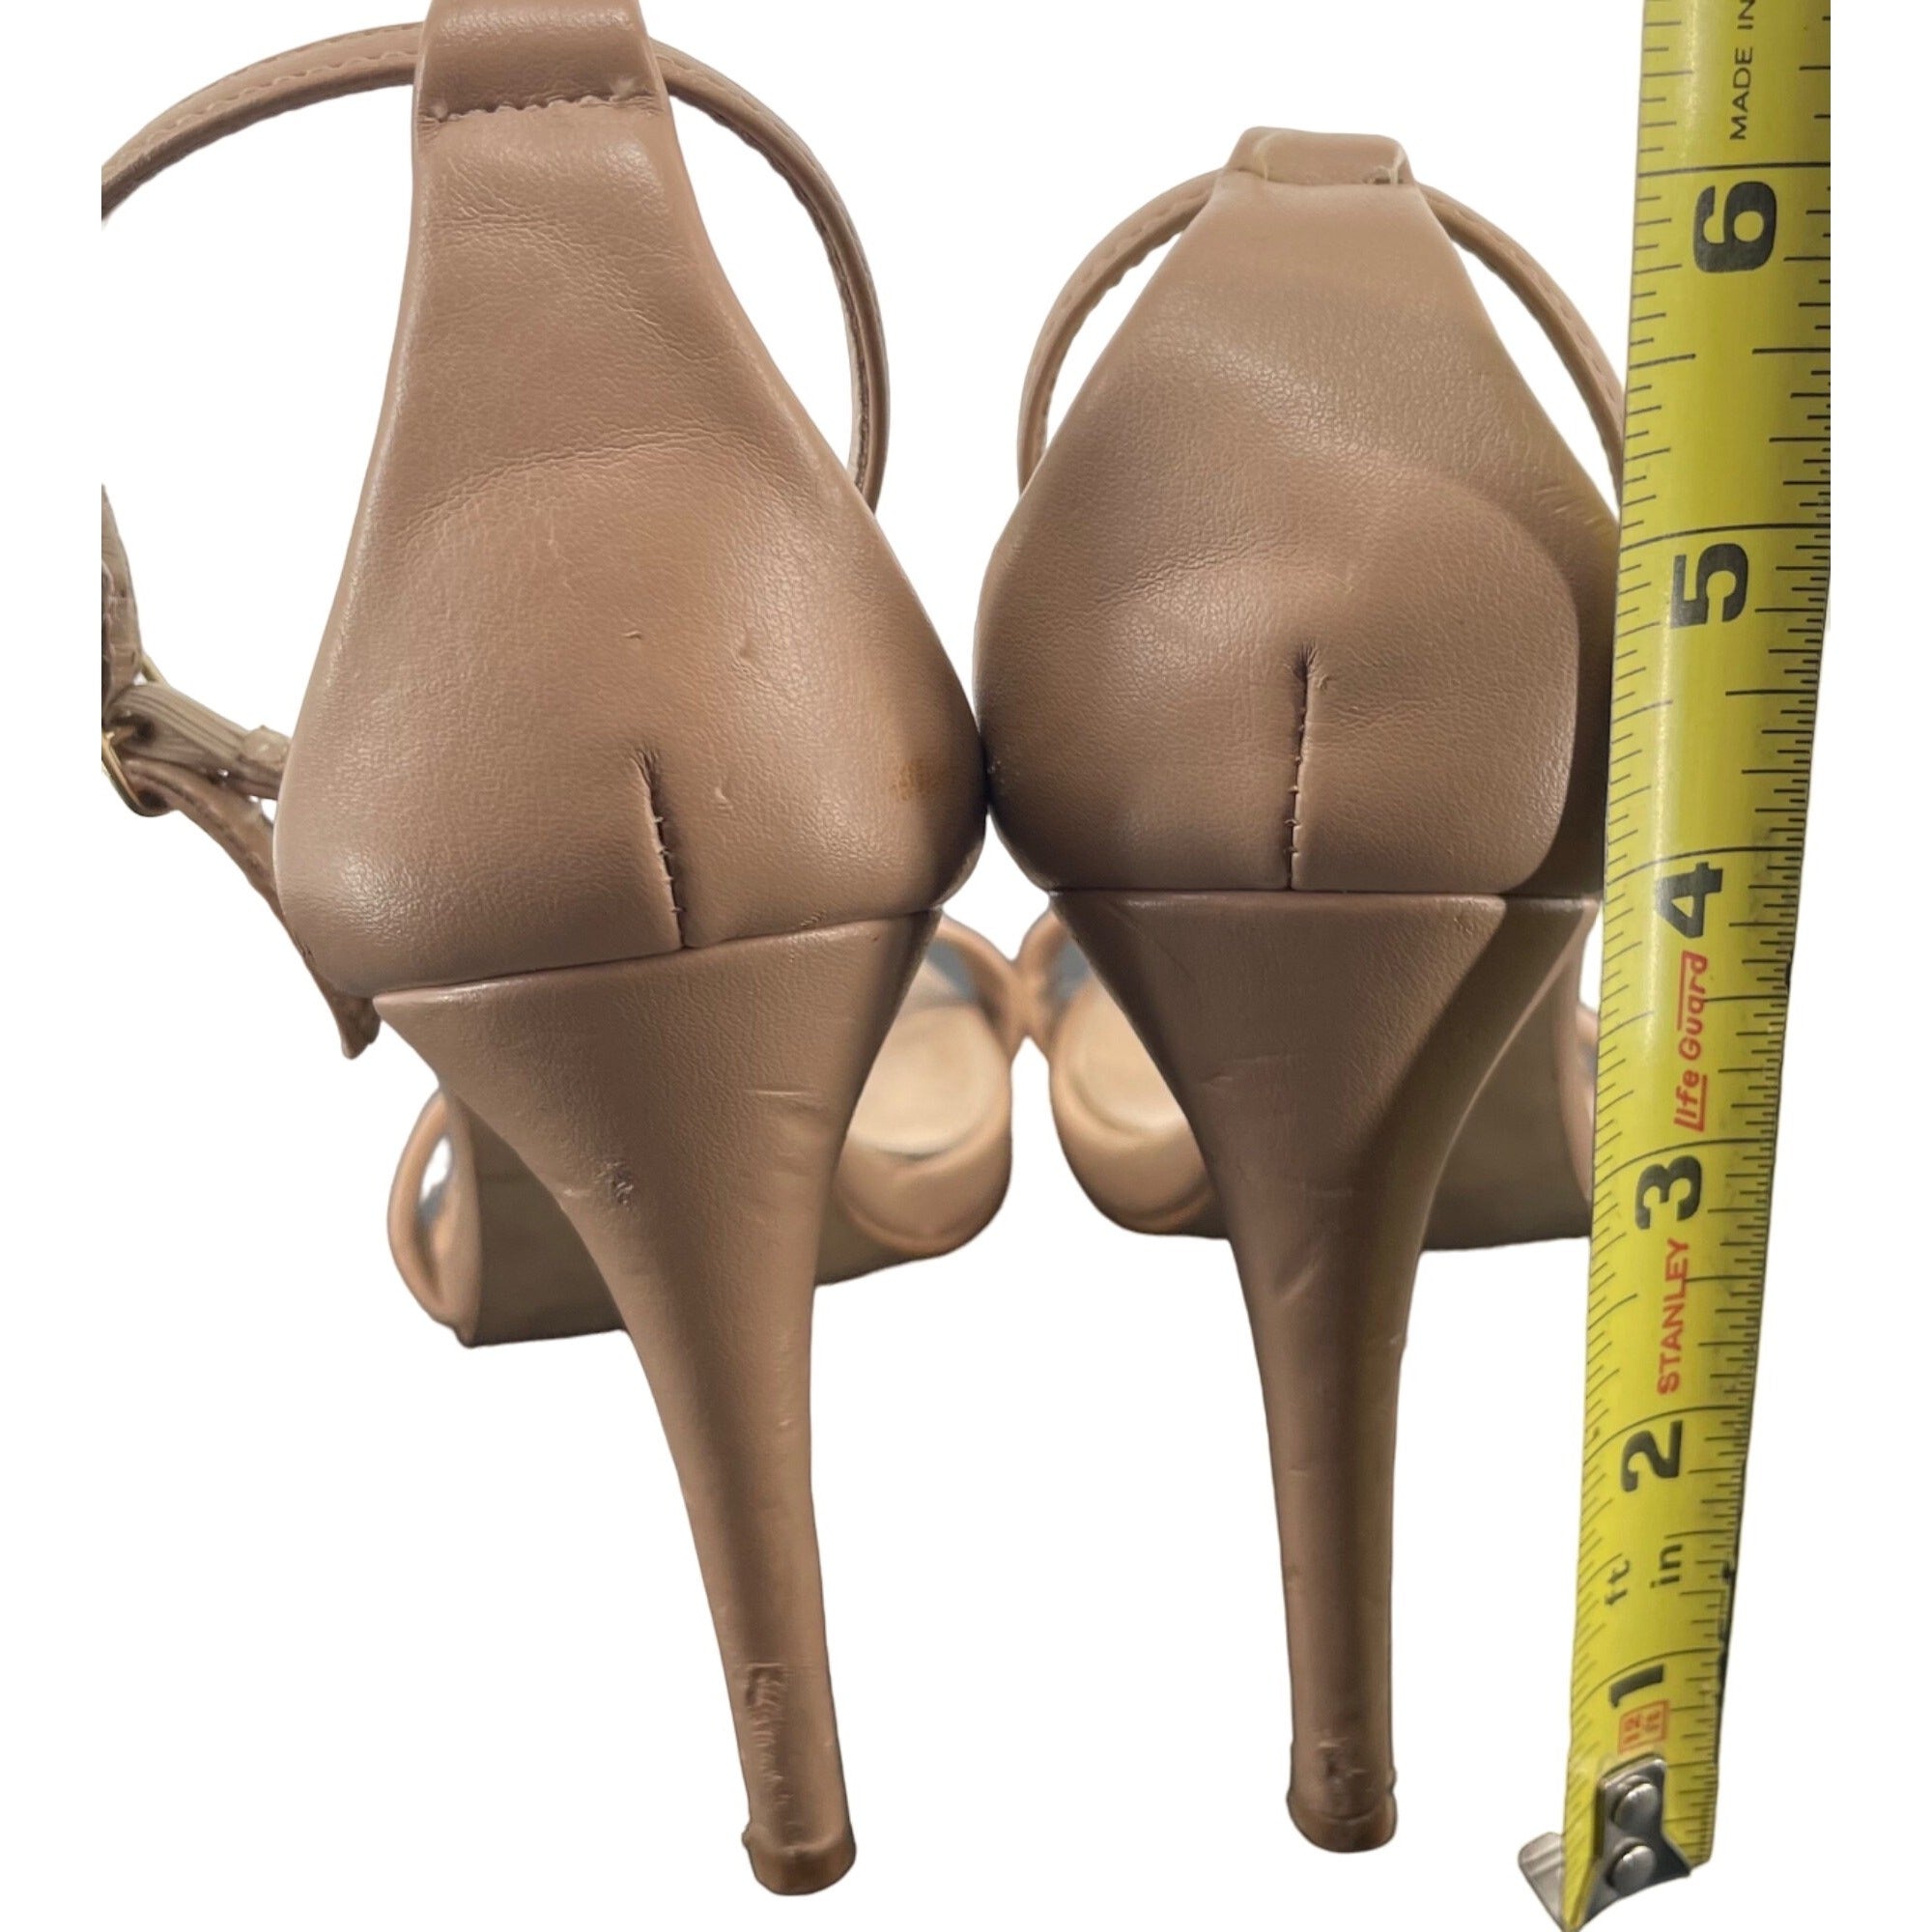 Steve Madden Women's Size 7 Light Brown/Tan Stecy Ankle Strap Open-Toe Shoes